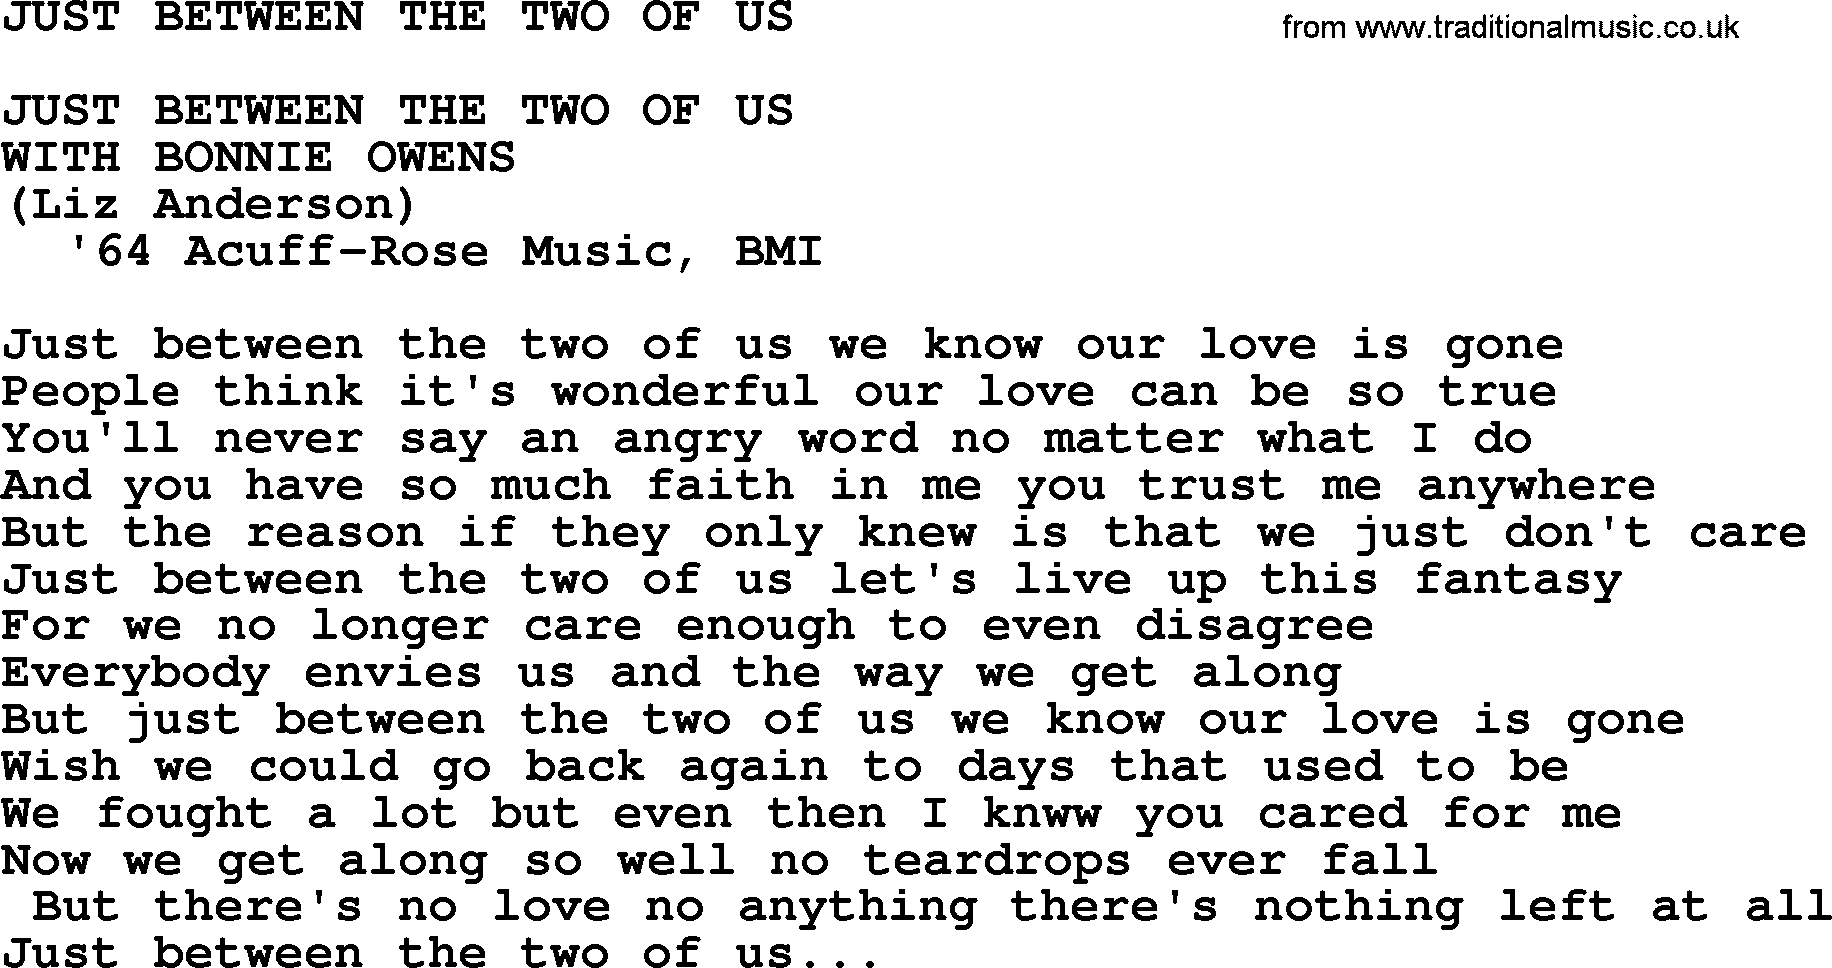 Merle Haggard song: Just Between The Two Of Us, lyrics.